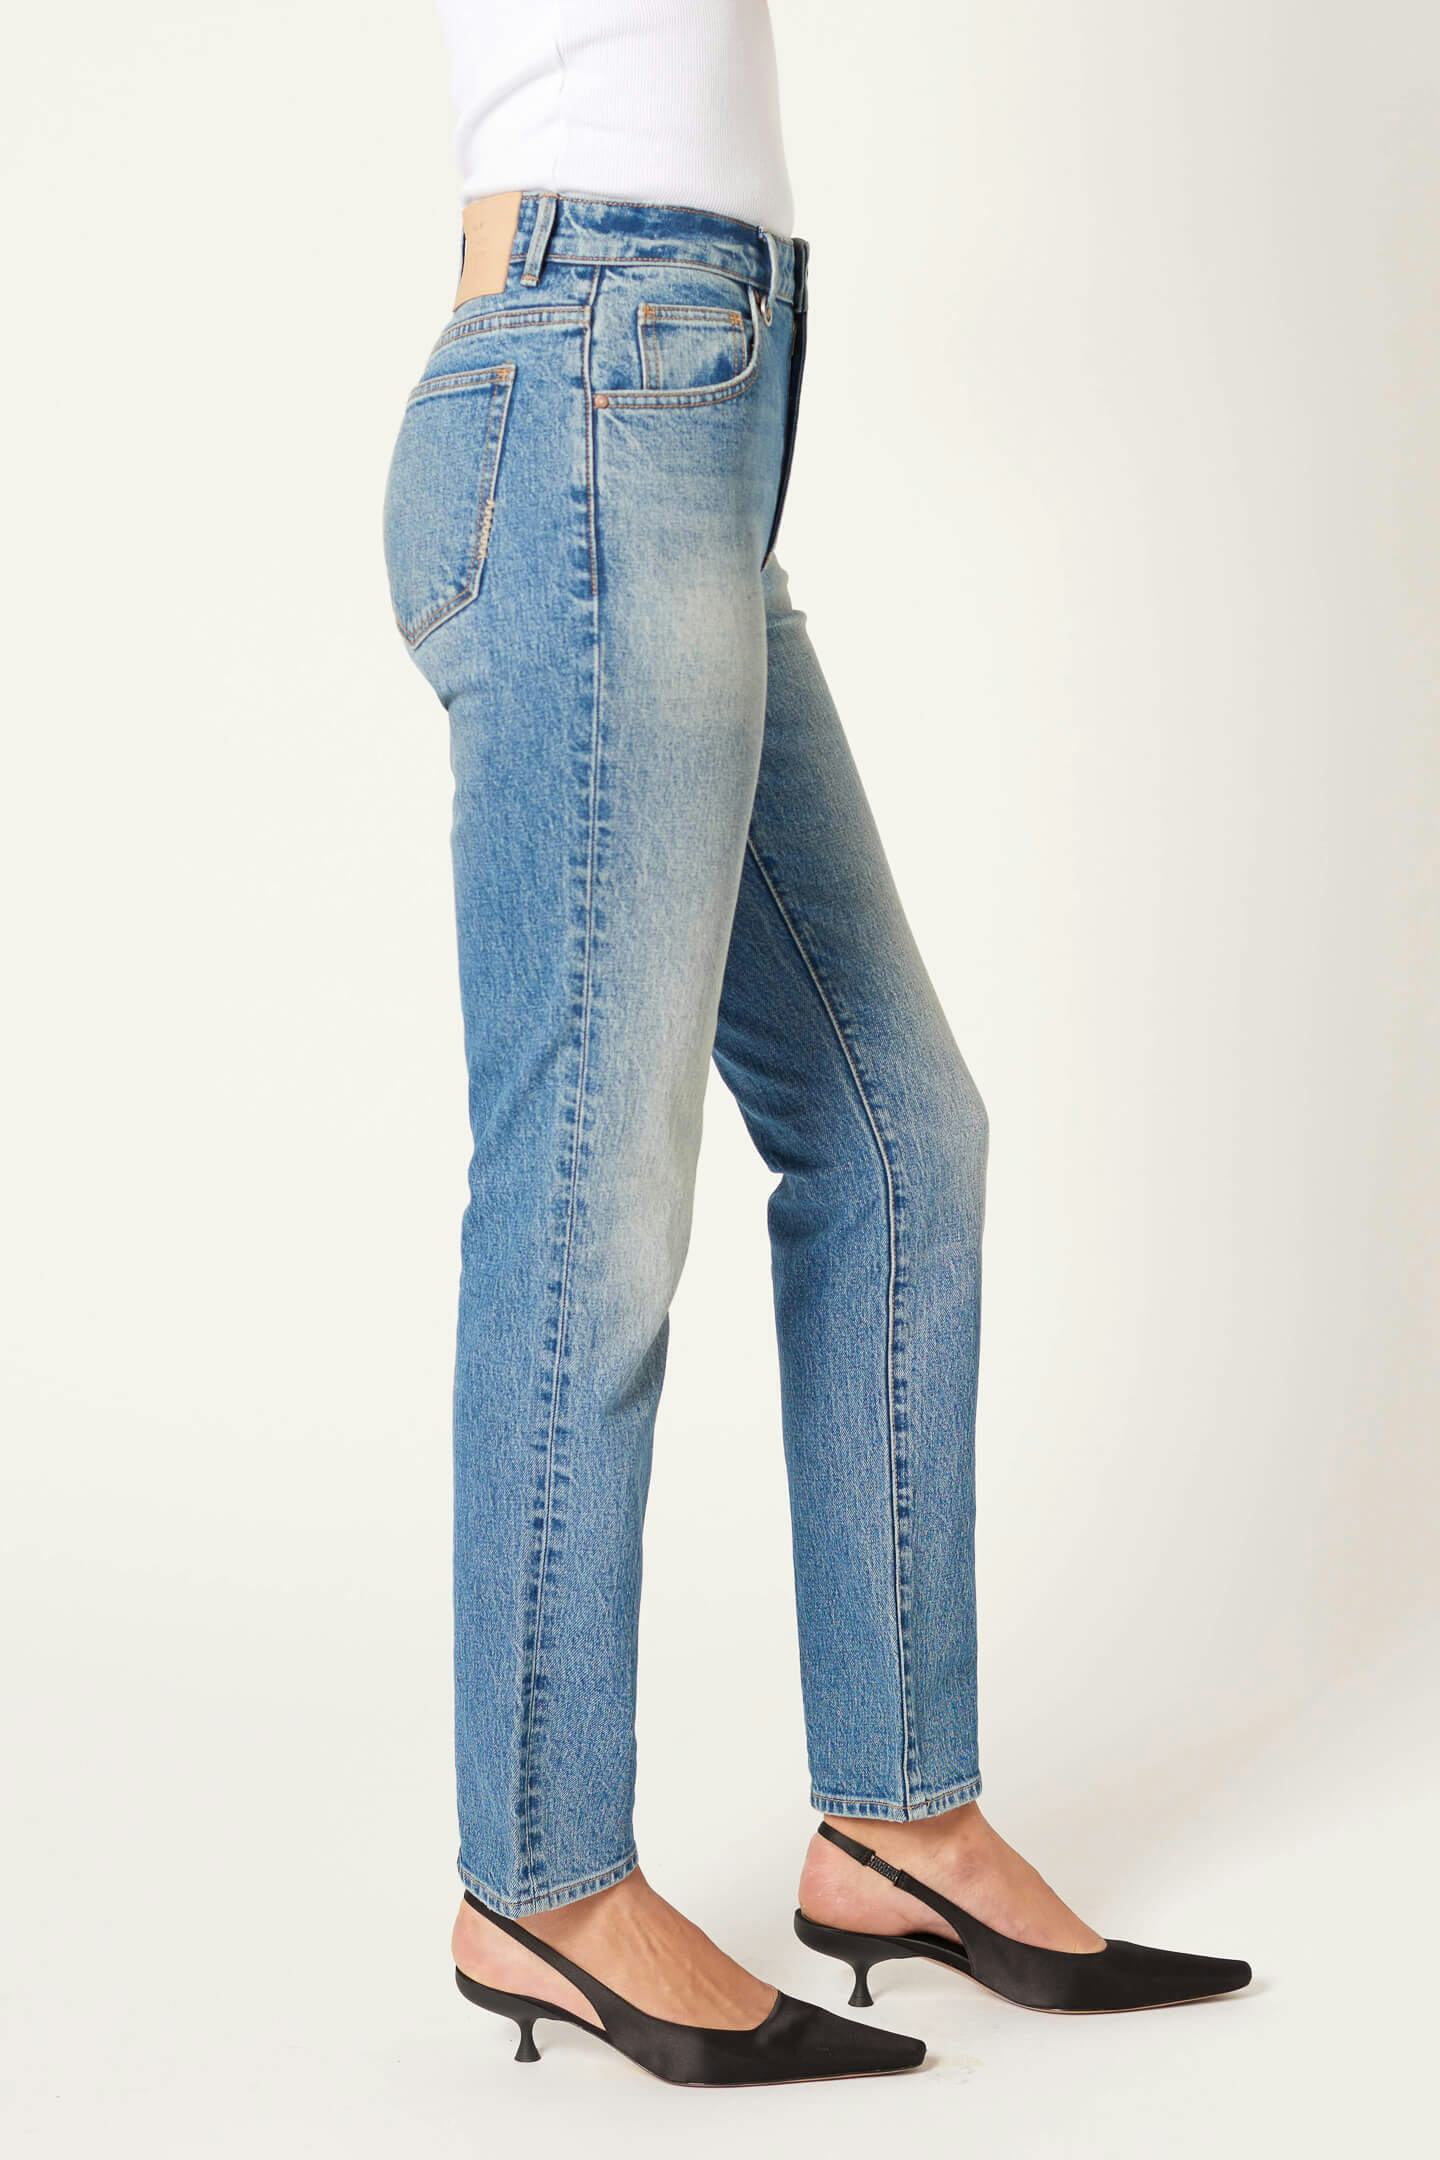 Lexi Straight - Abandon Neuw mid grey womens-jeans 